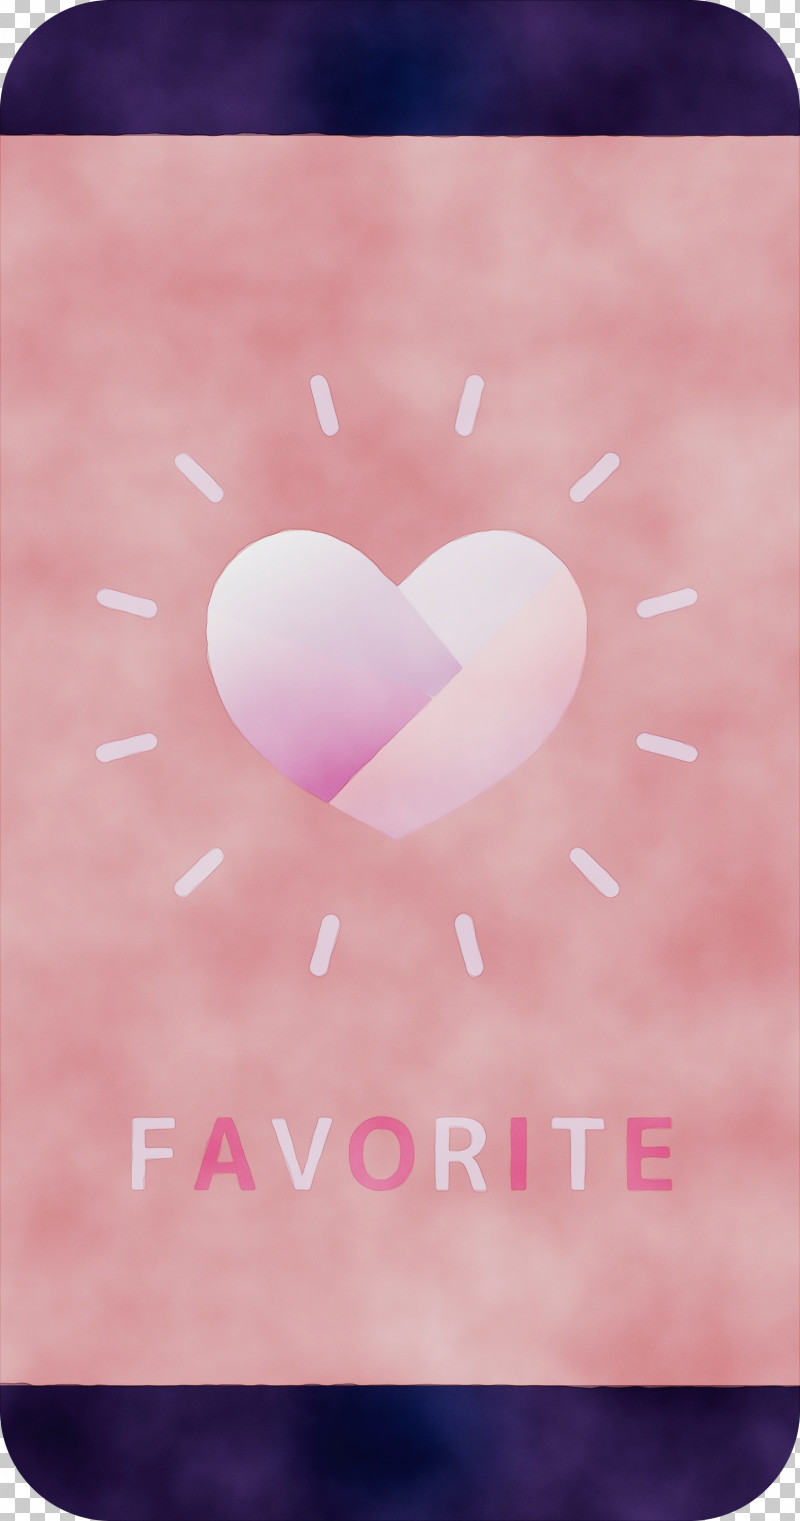 Font Heart Petal Close-up M-095 PNG, Clipart, Closeup, Darling, Favorite, Favourite, Heart Free PNG Download